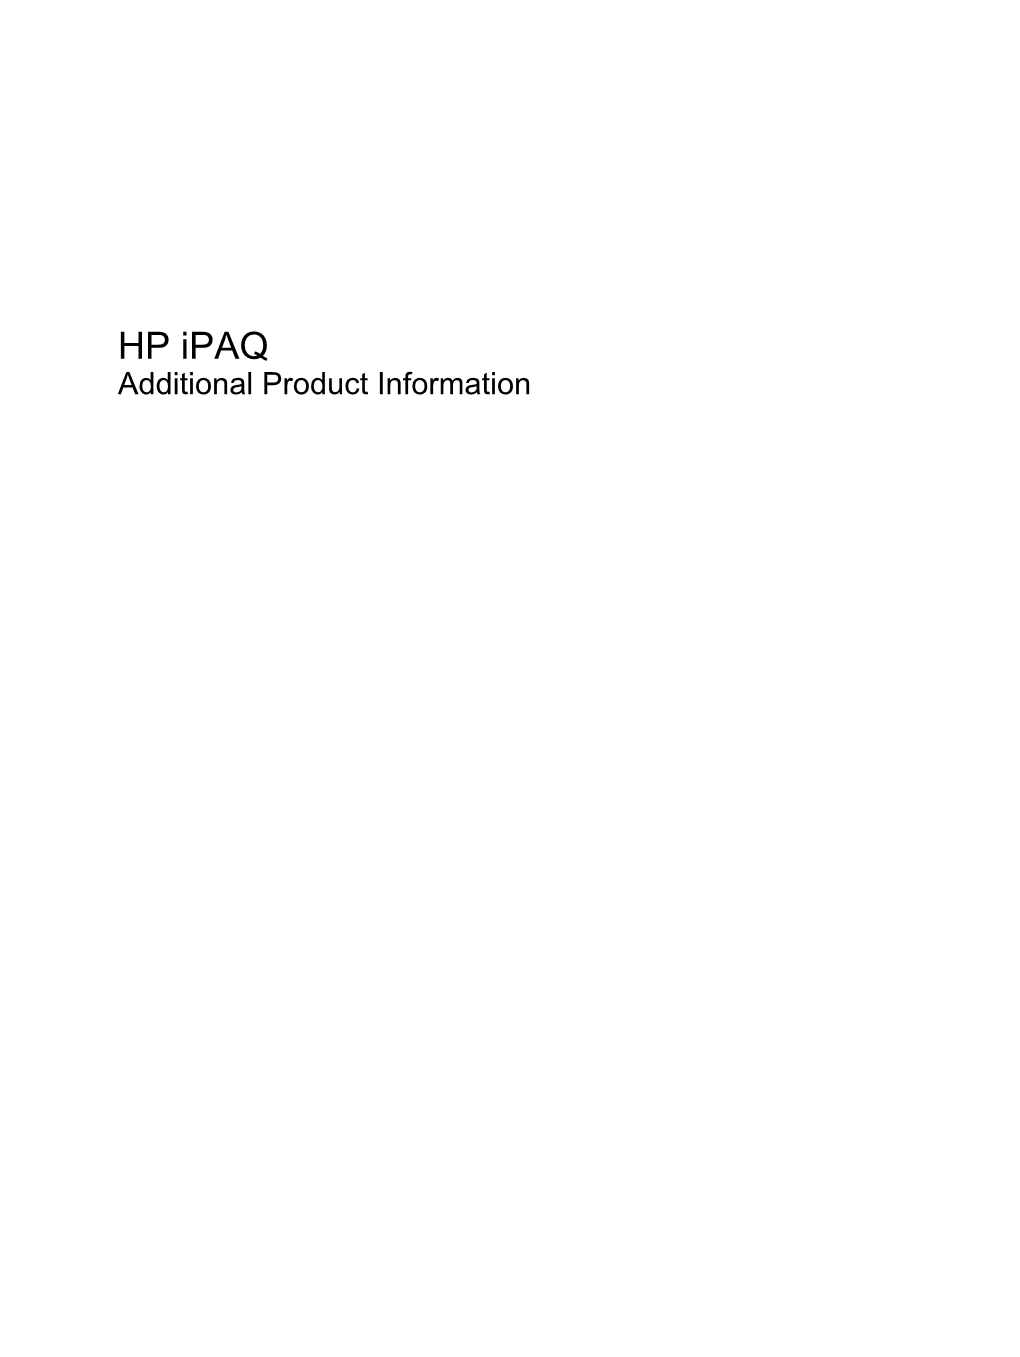 HP Ipaq Additional Product Information © 2007 Hewlett-Packard Development Company, L.P